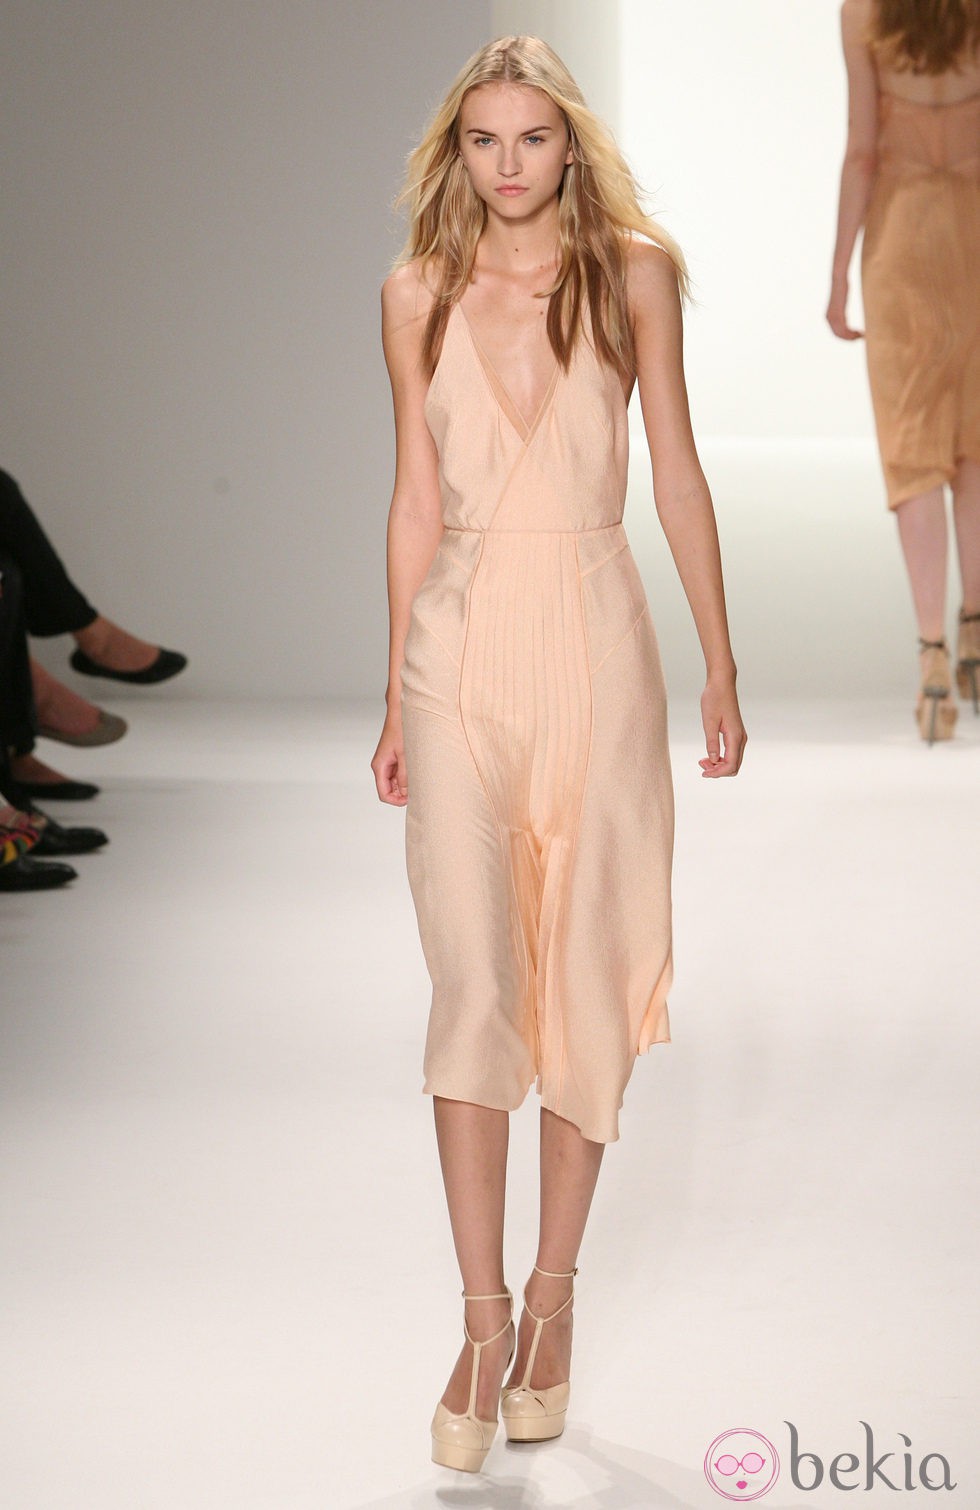 Vestido con escote pico de Calvin Klein, colección primavera de 2012